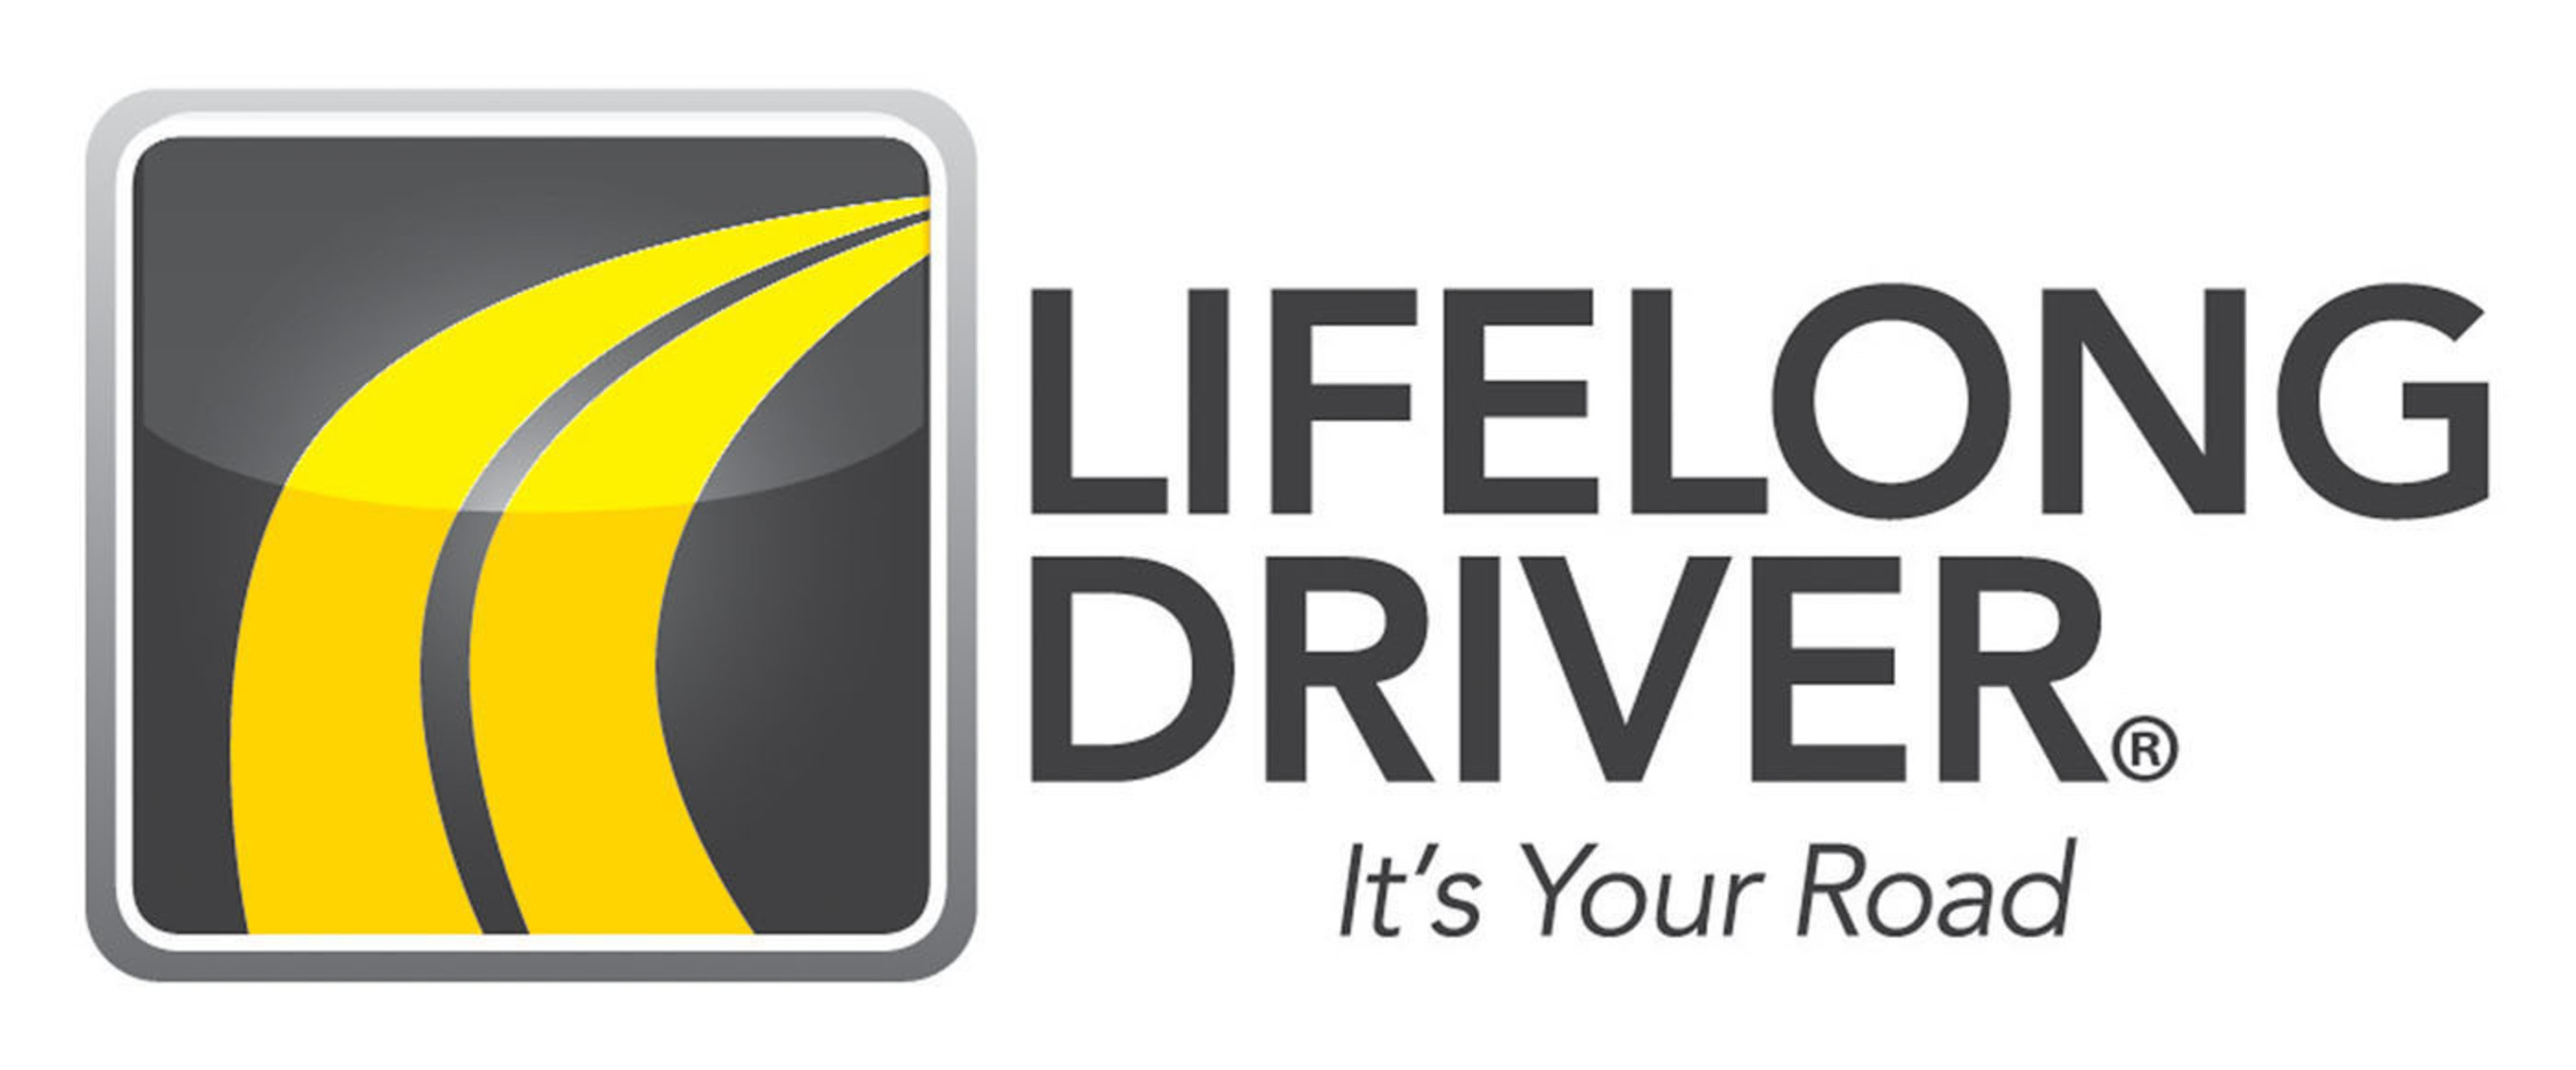 Lifelong Driver Logo. (PRNewsFoto/ADEPT Driver) (PRNewsFoto/)